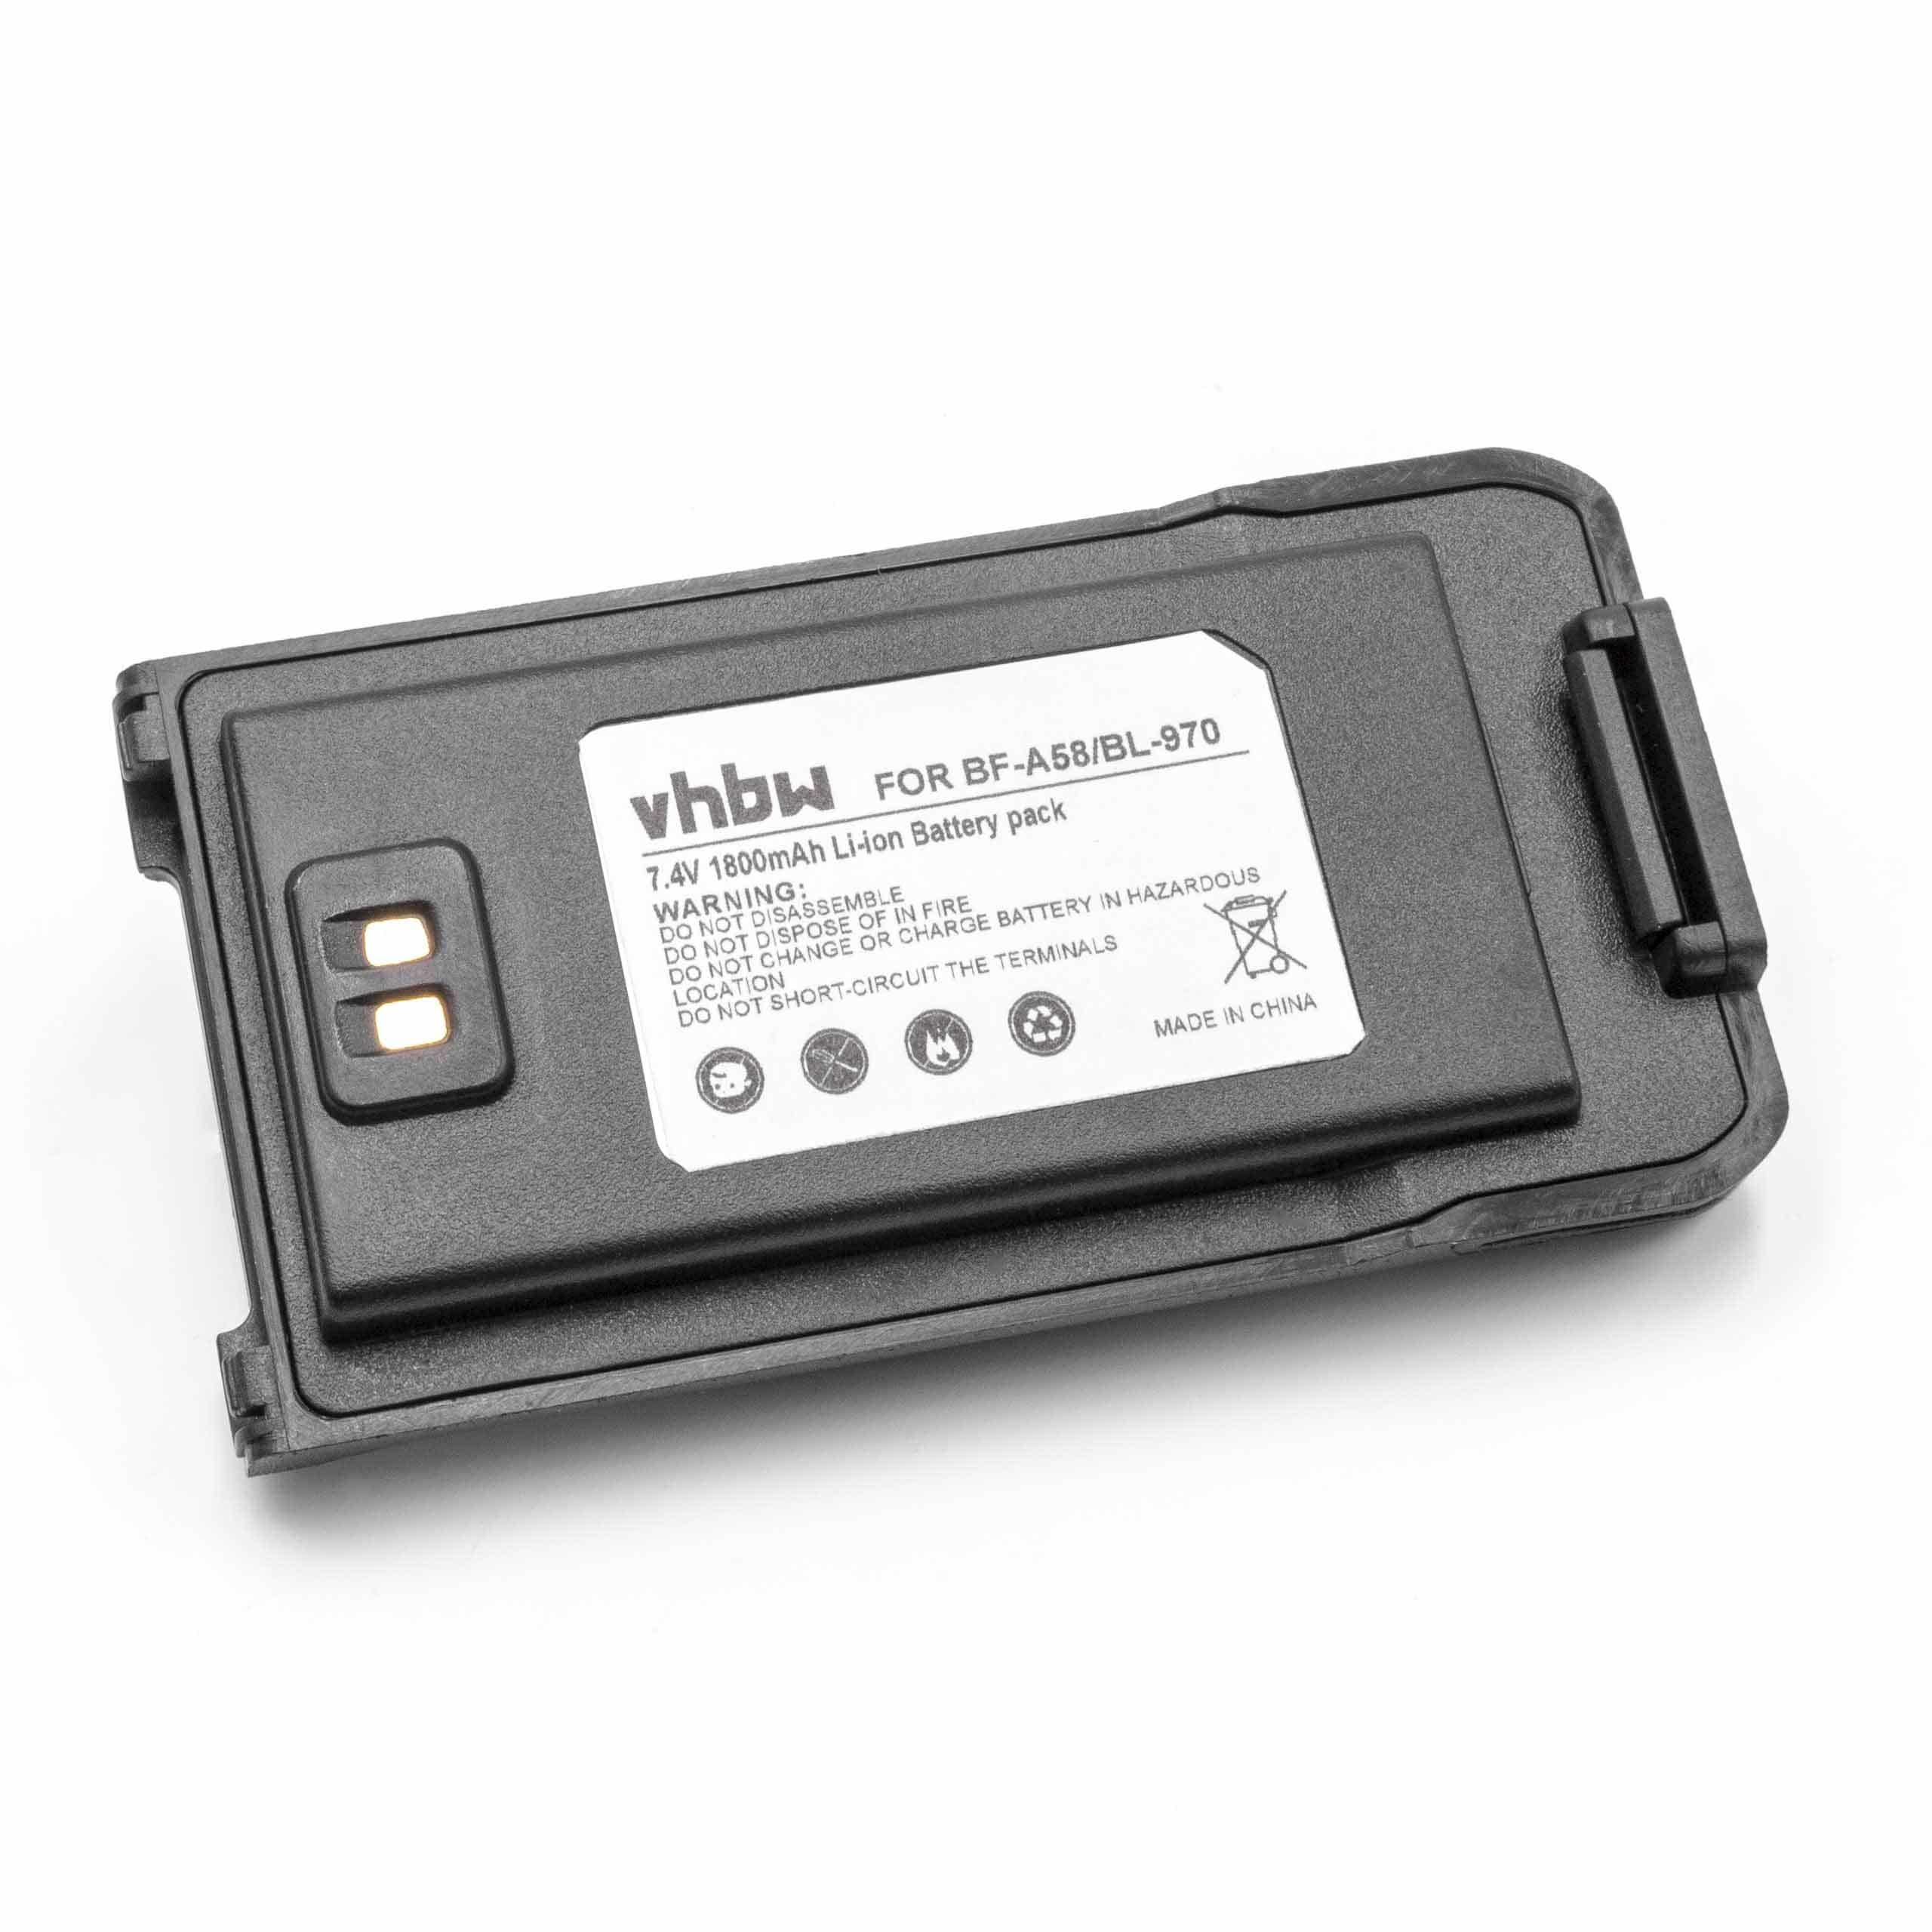 Batterie remplace Baofeng BF-A58, BL-970 pour radio talkie-walkie - 1800mAh 7,4V Li-ion